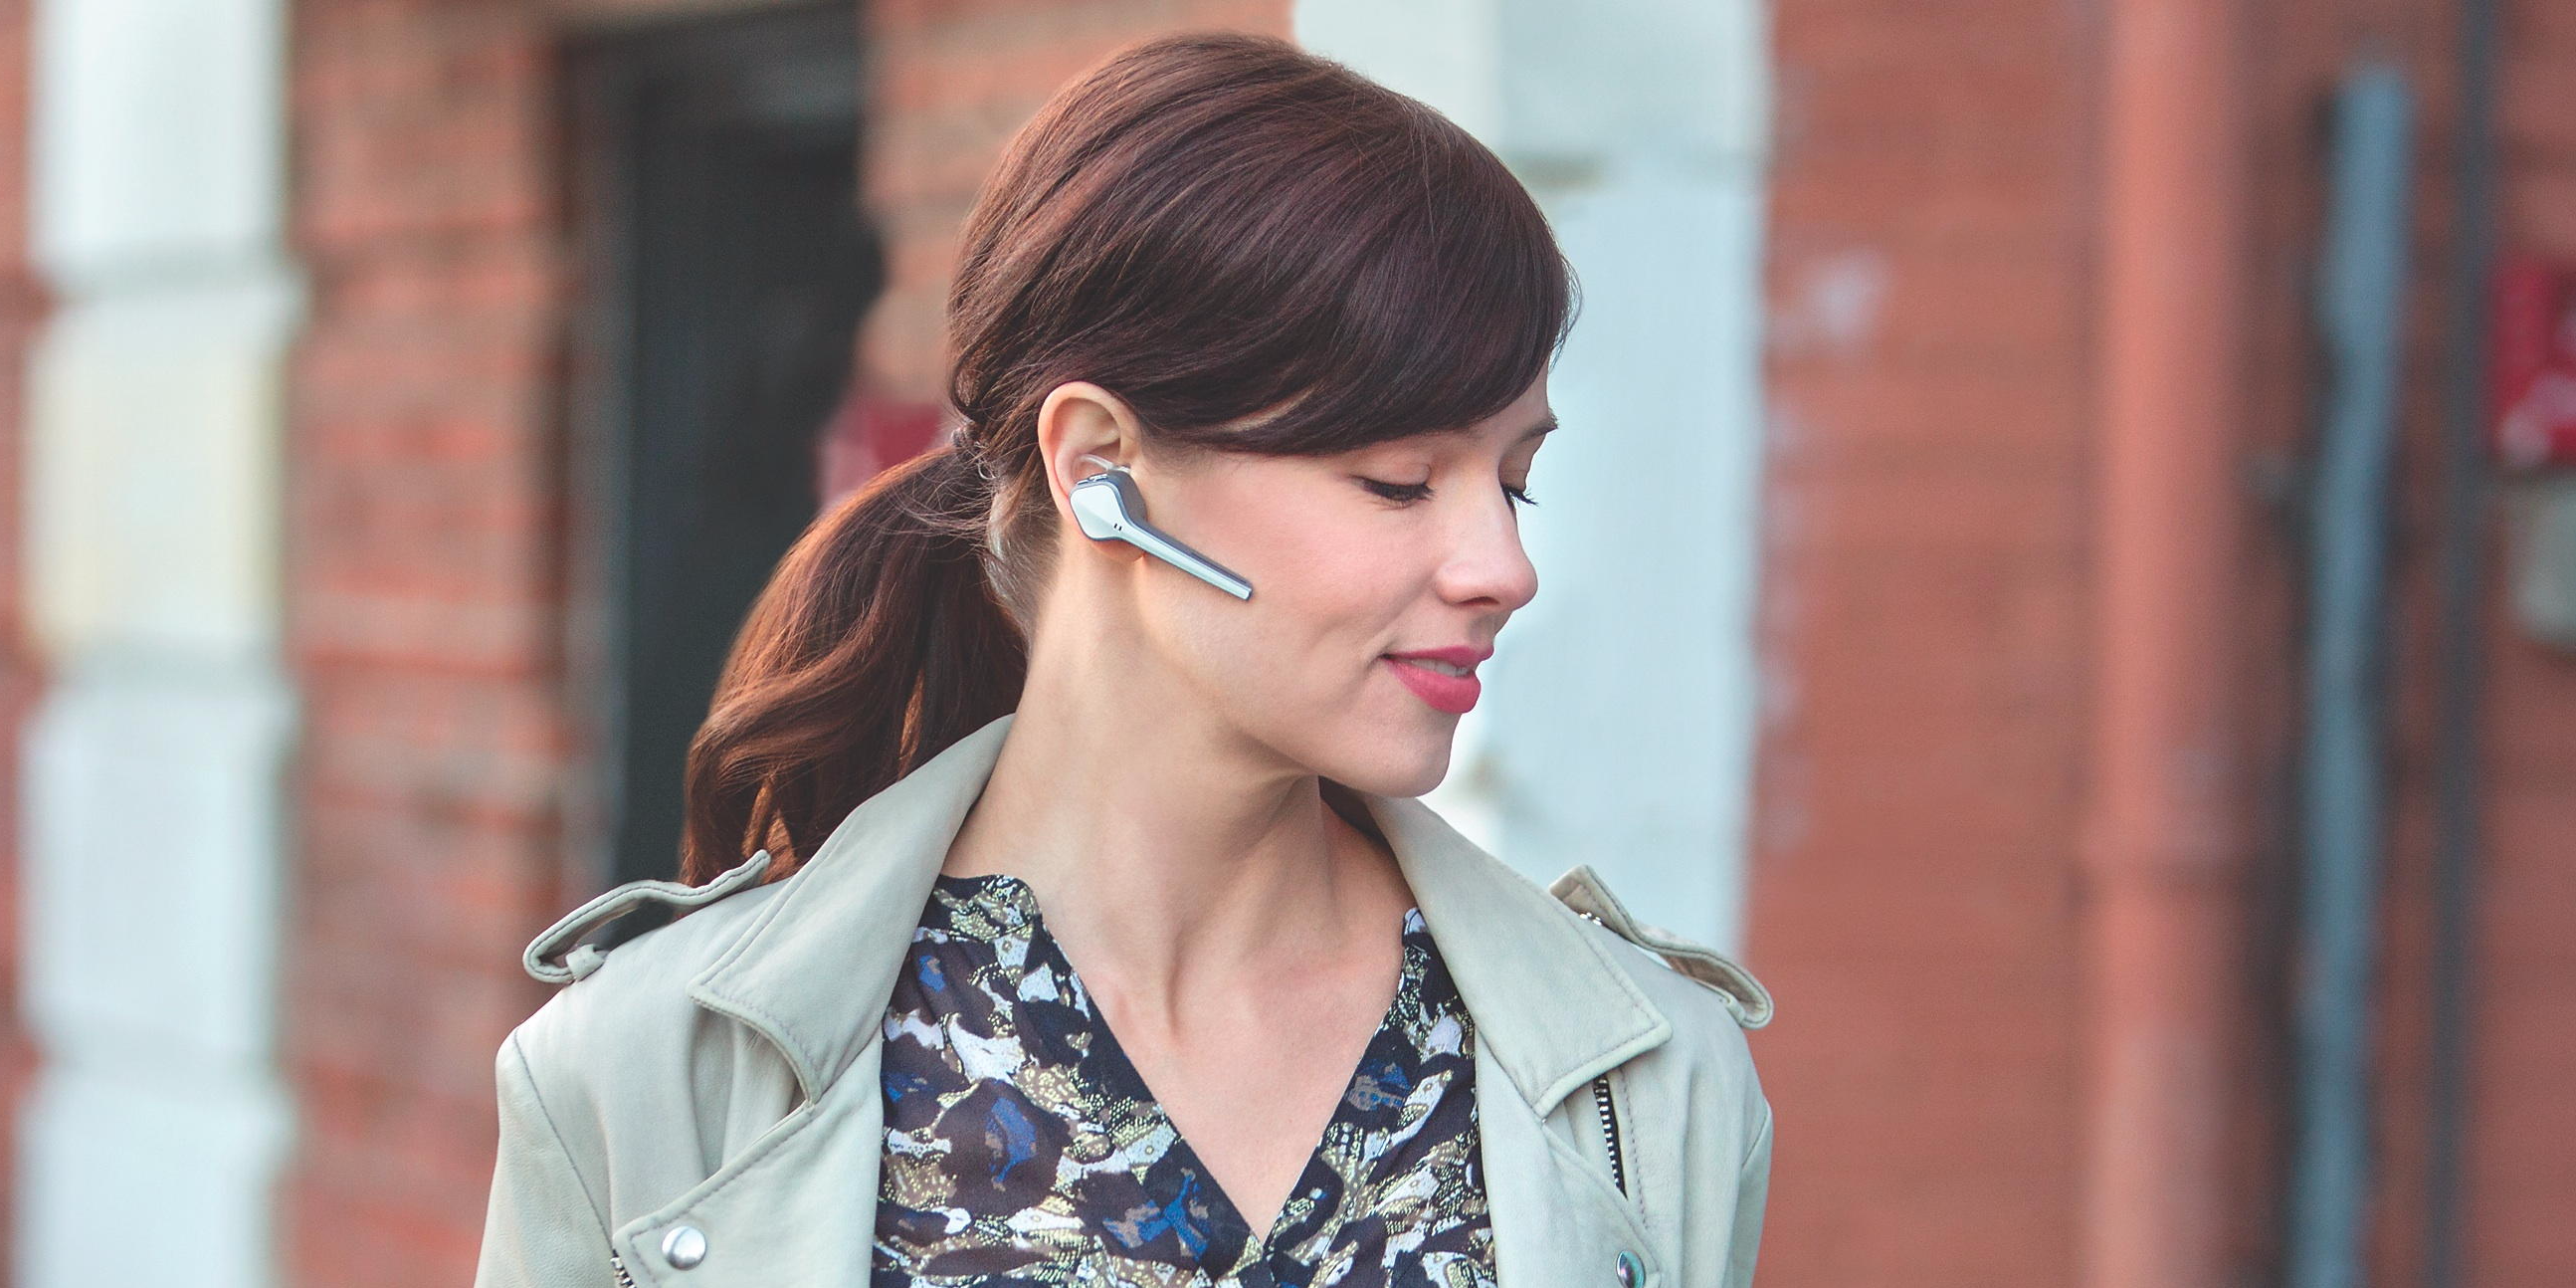 Microsoft Clip, a wearable earpiece powered by Cortana